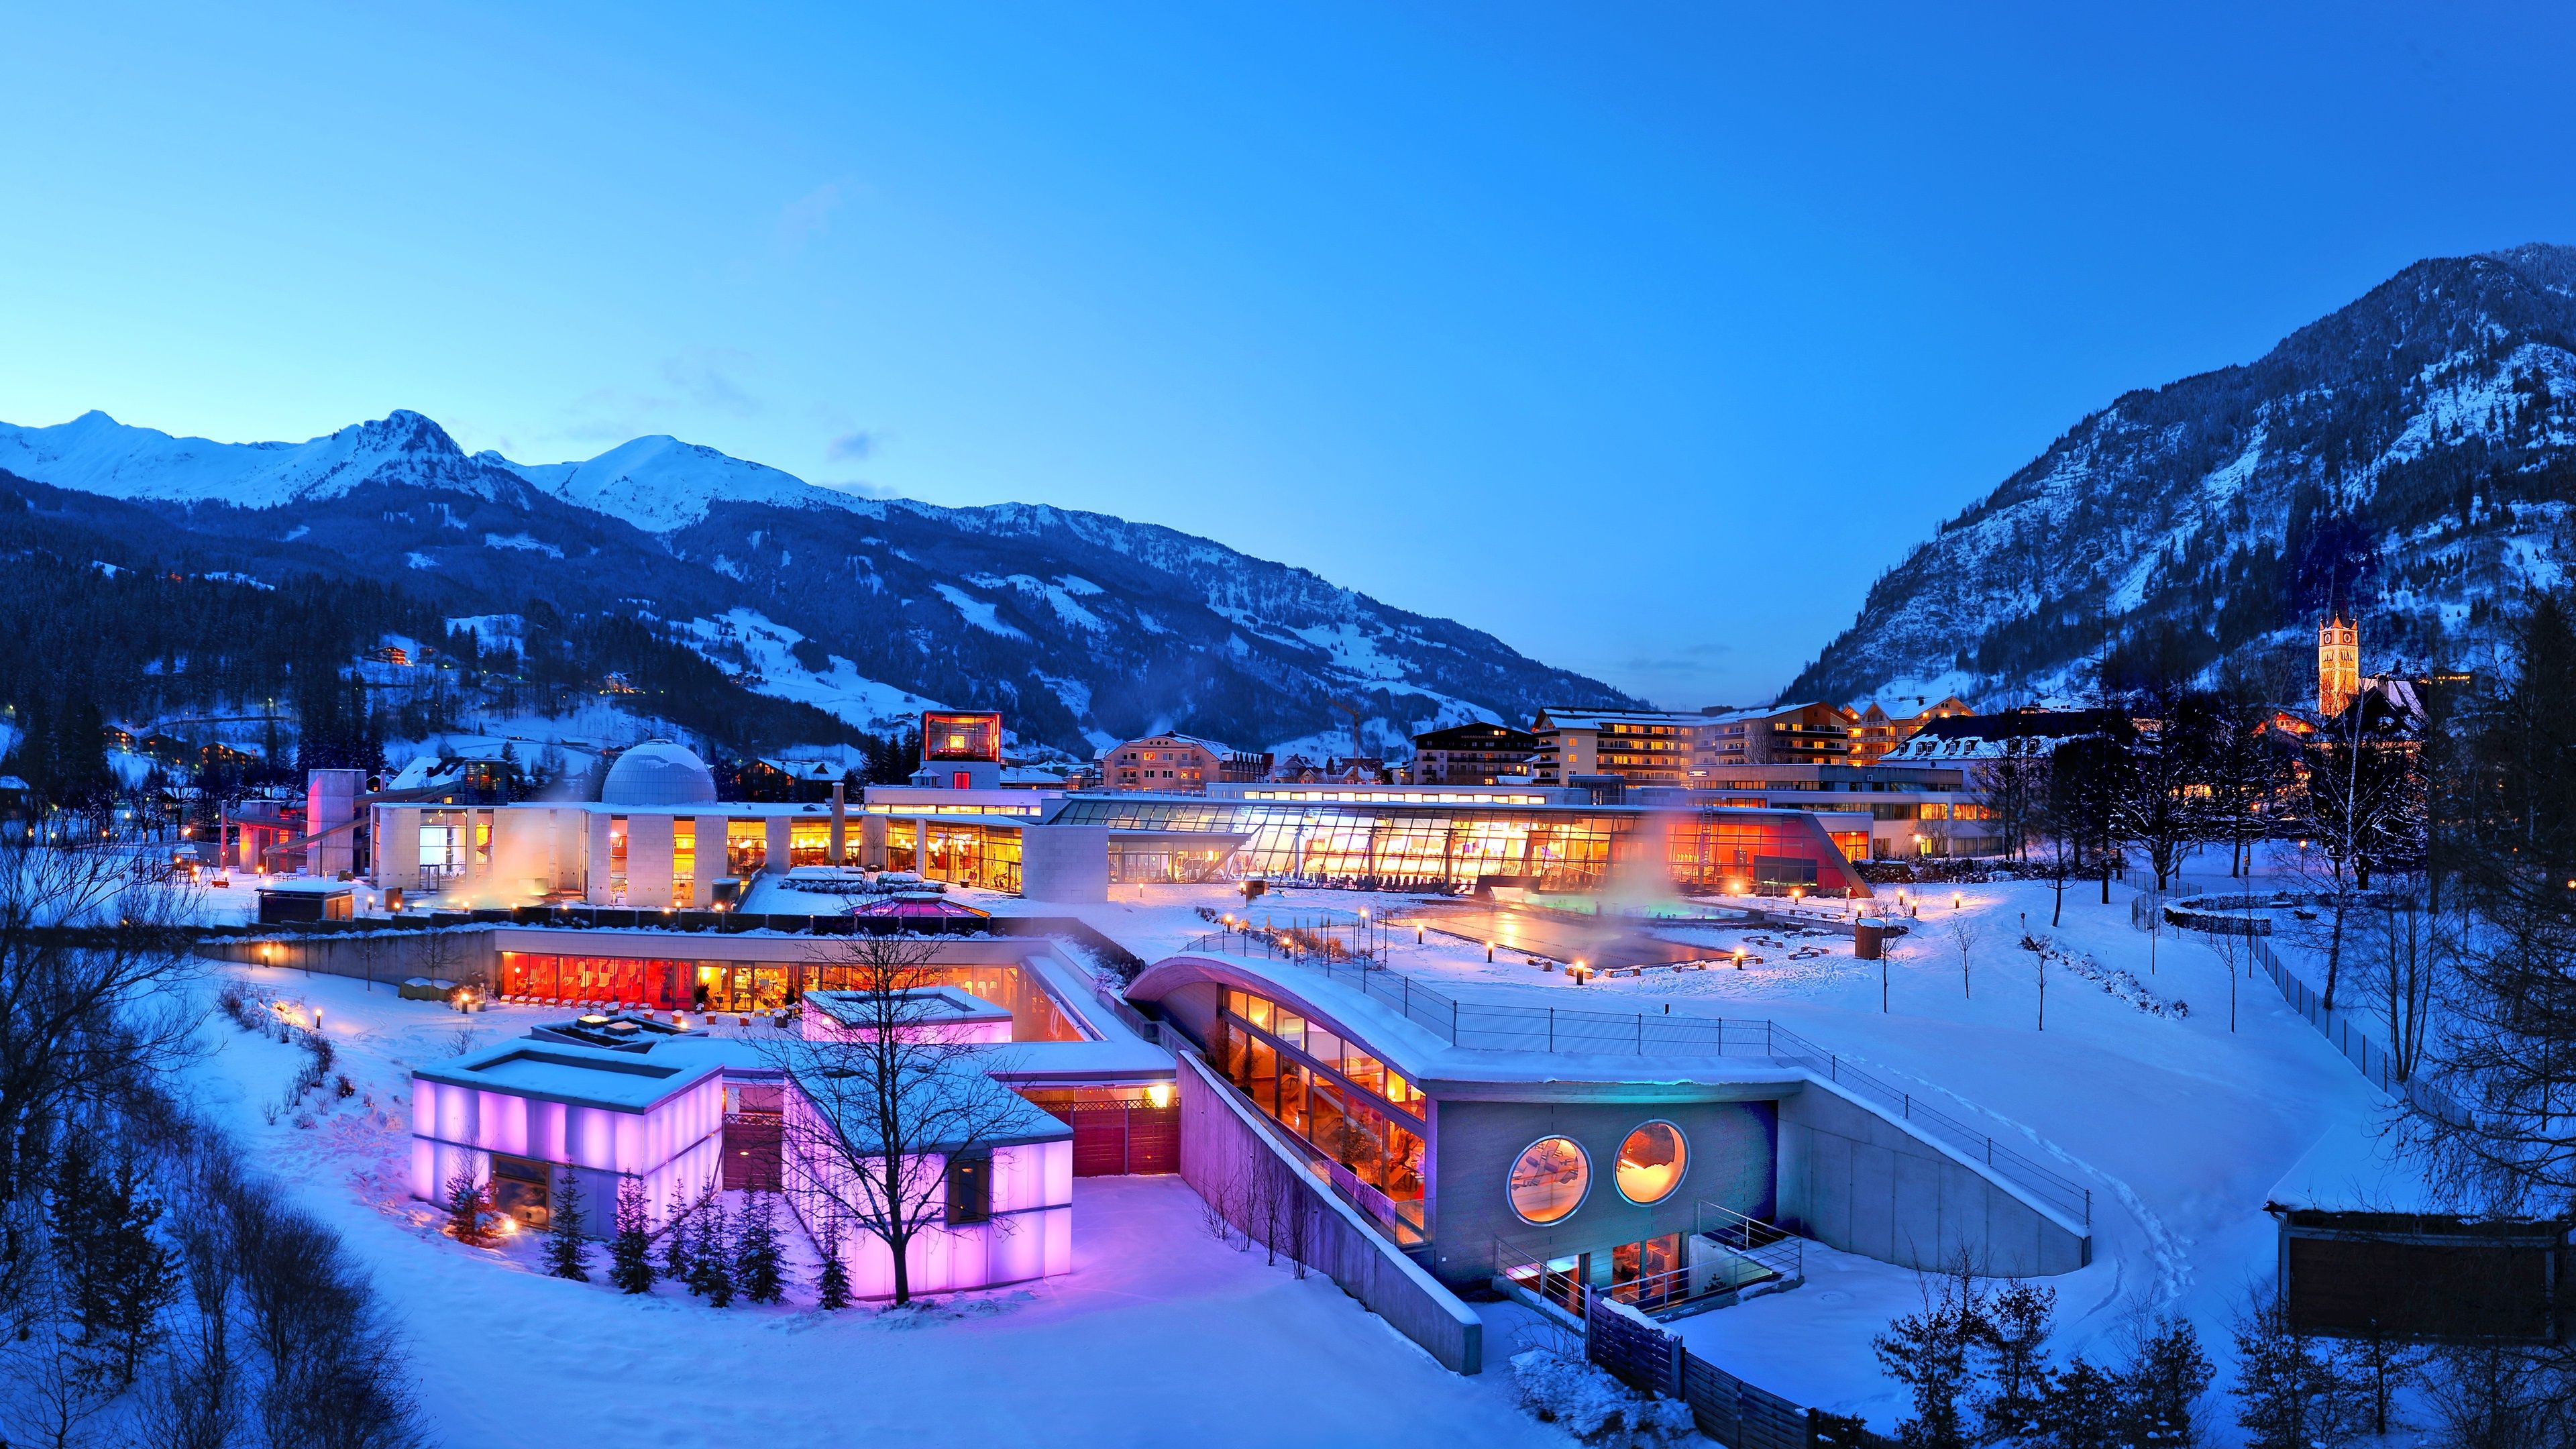 Wallpaper Lindner Alpentherme in winter, dusk, snow, mountain, lights, Switzerland 3840x2160 UHD 4K Picture, Image